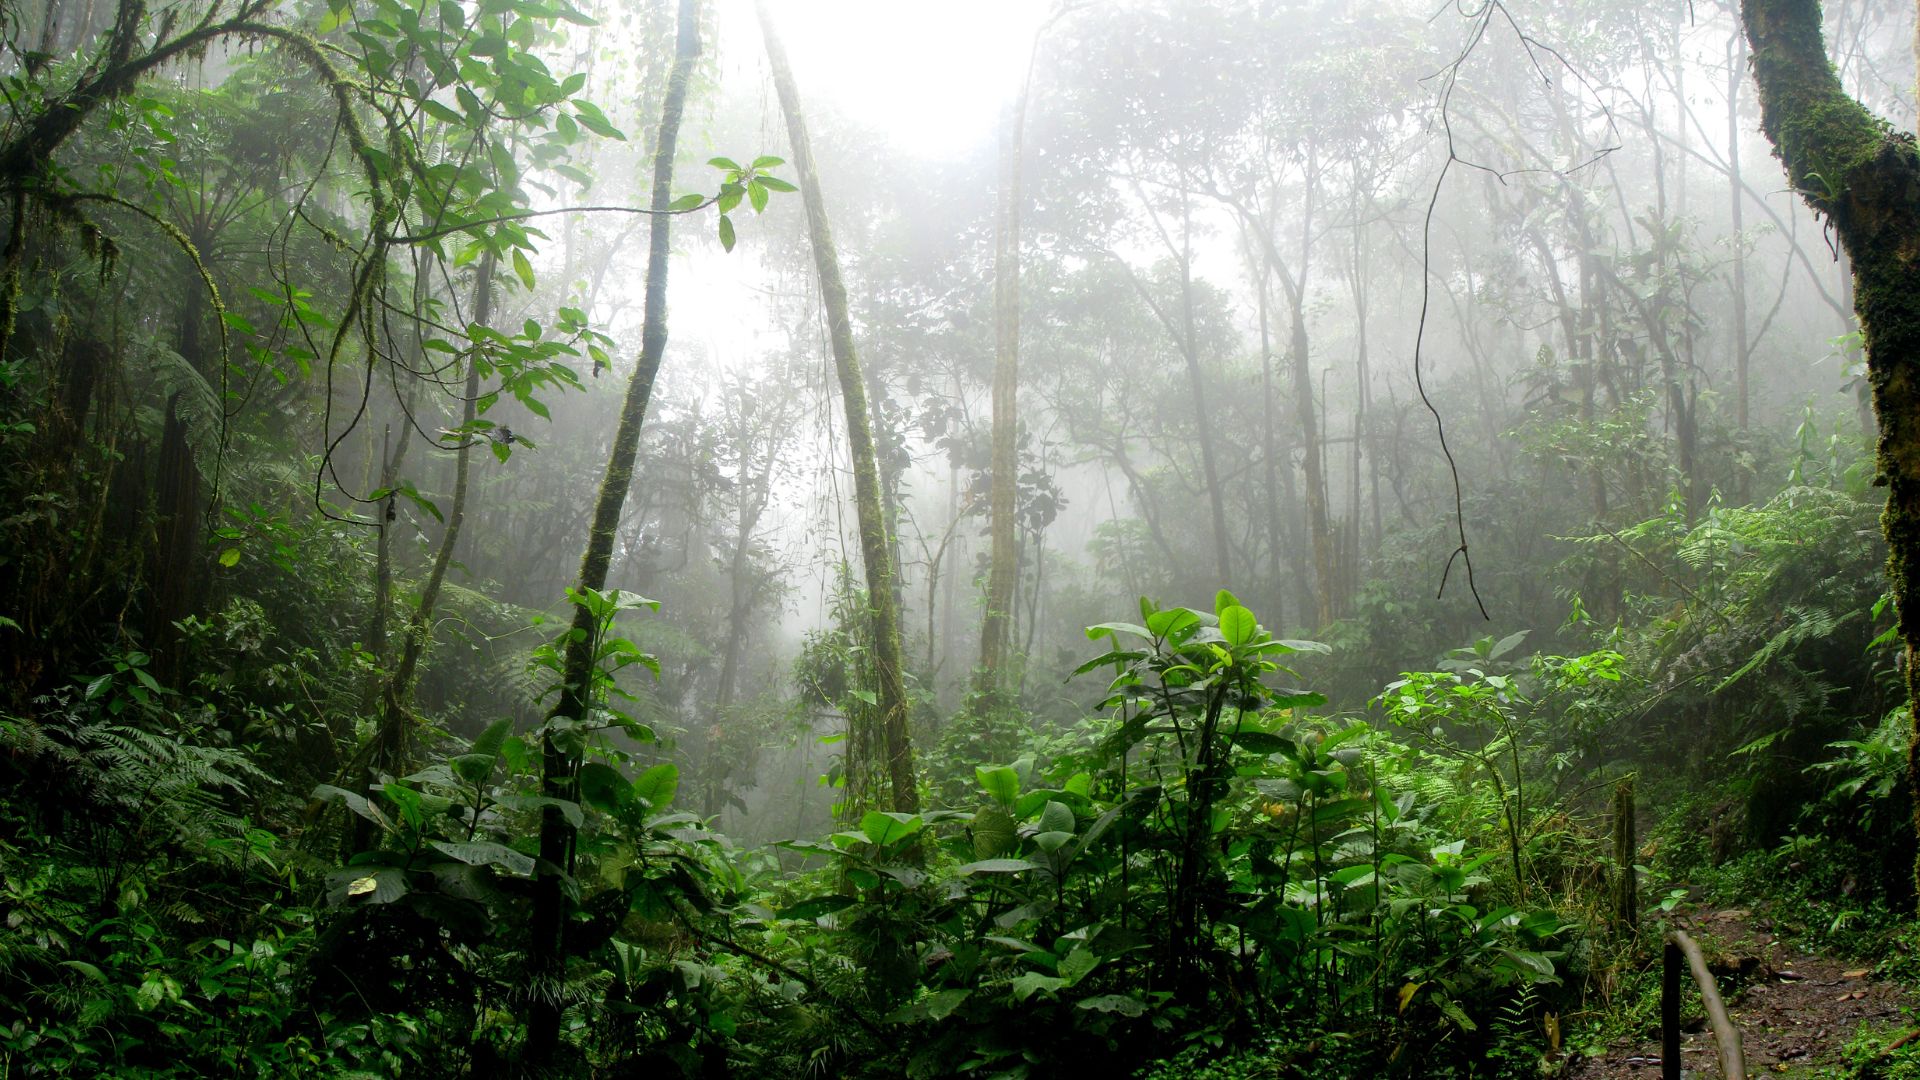 Cover photo of a jungle